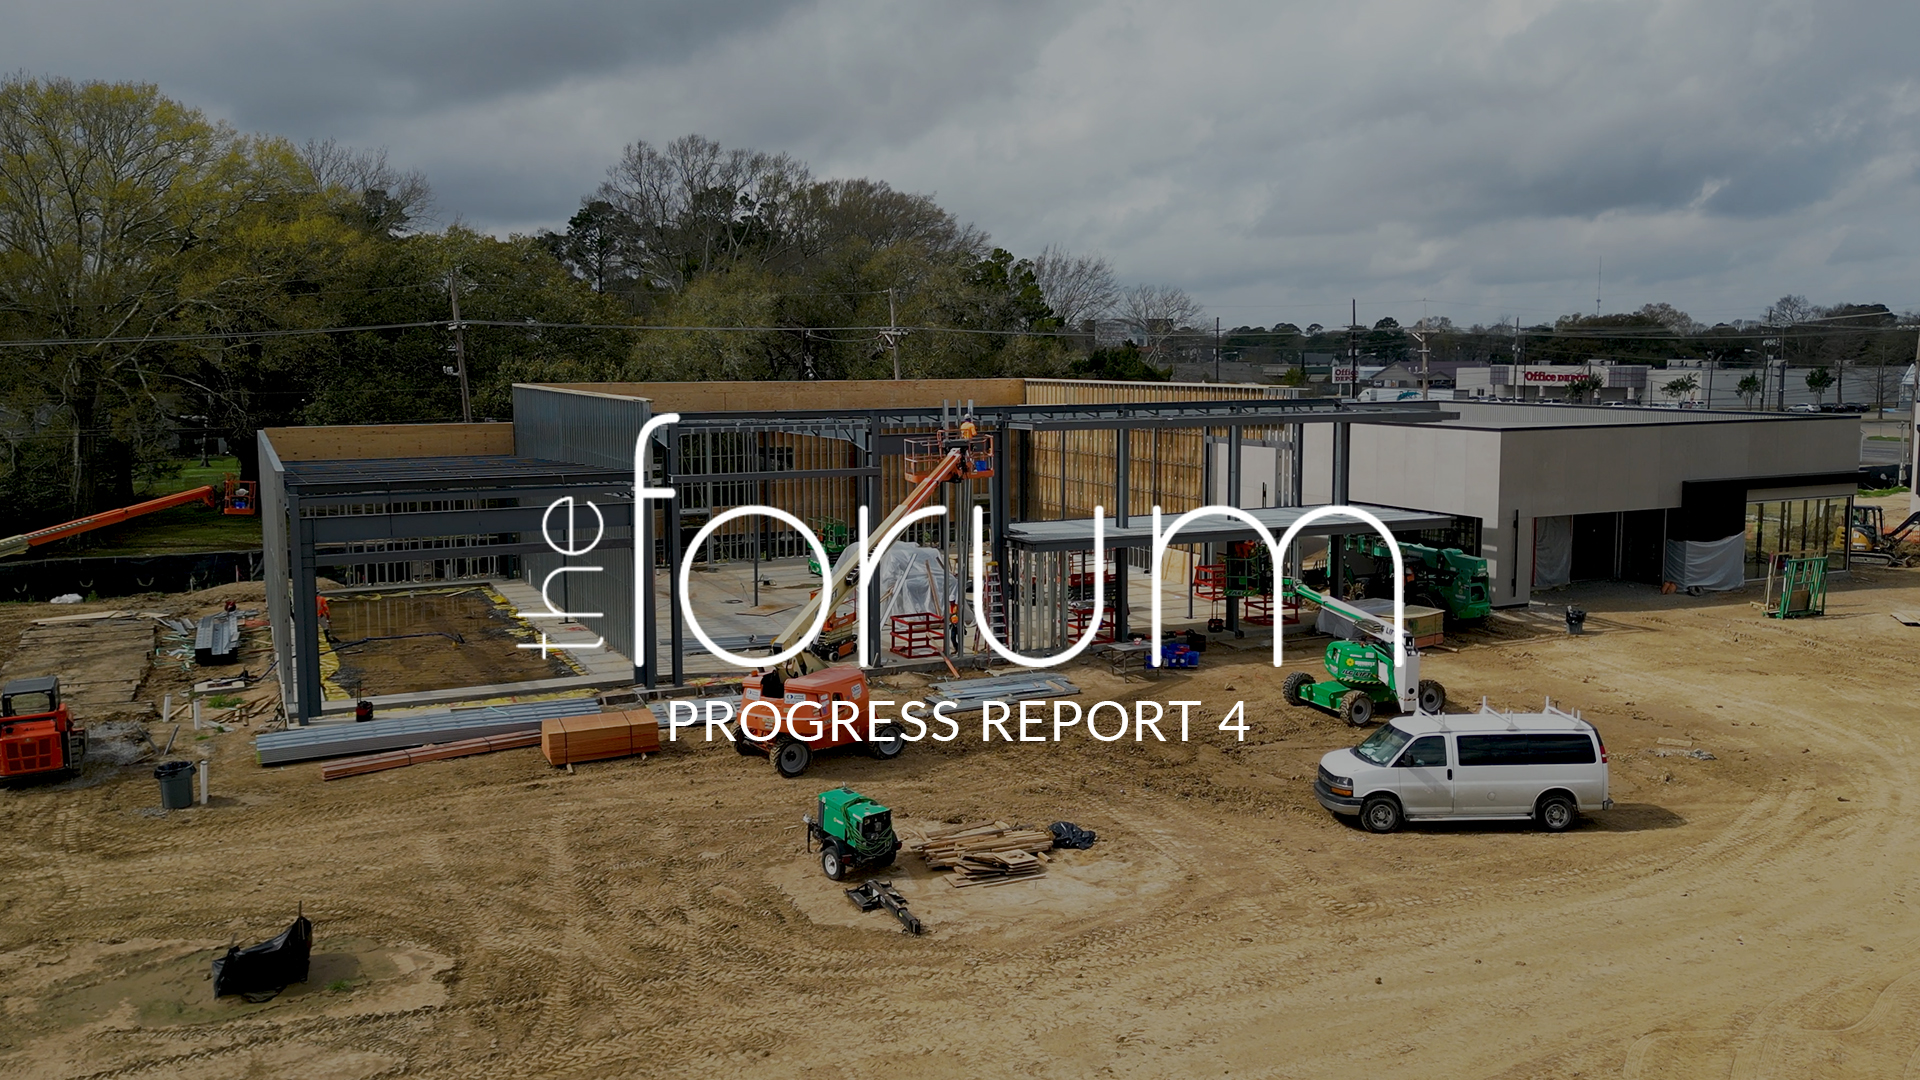 The Forum Lafayette Progress